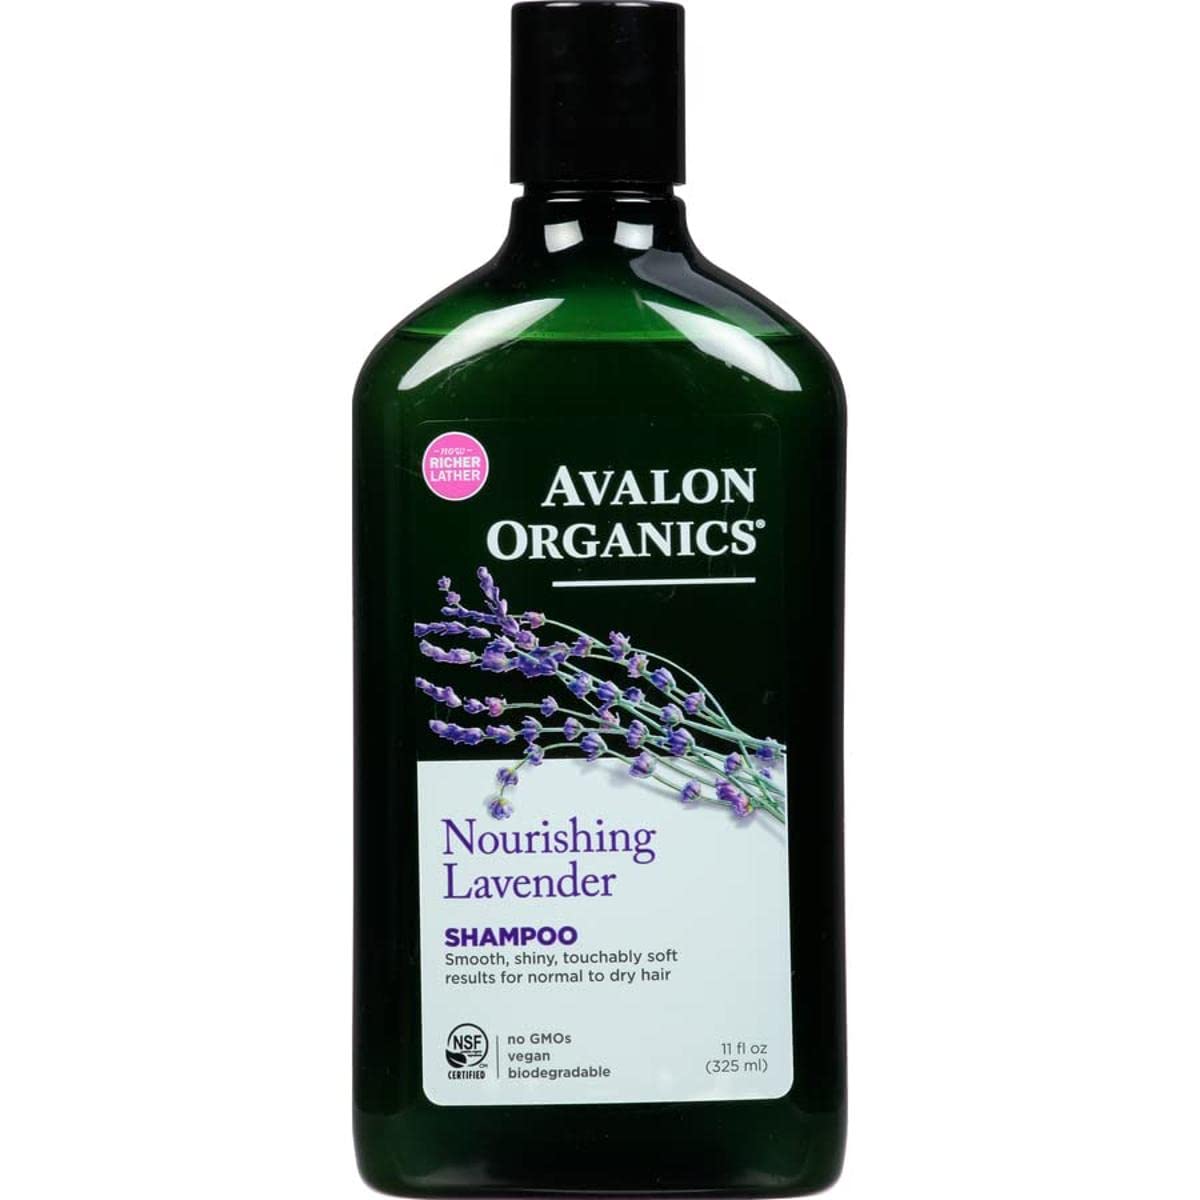 Avalon Organics Shampoo, Nourishing Lavender, 11 Oz